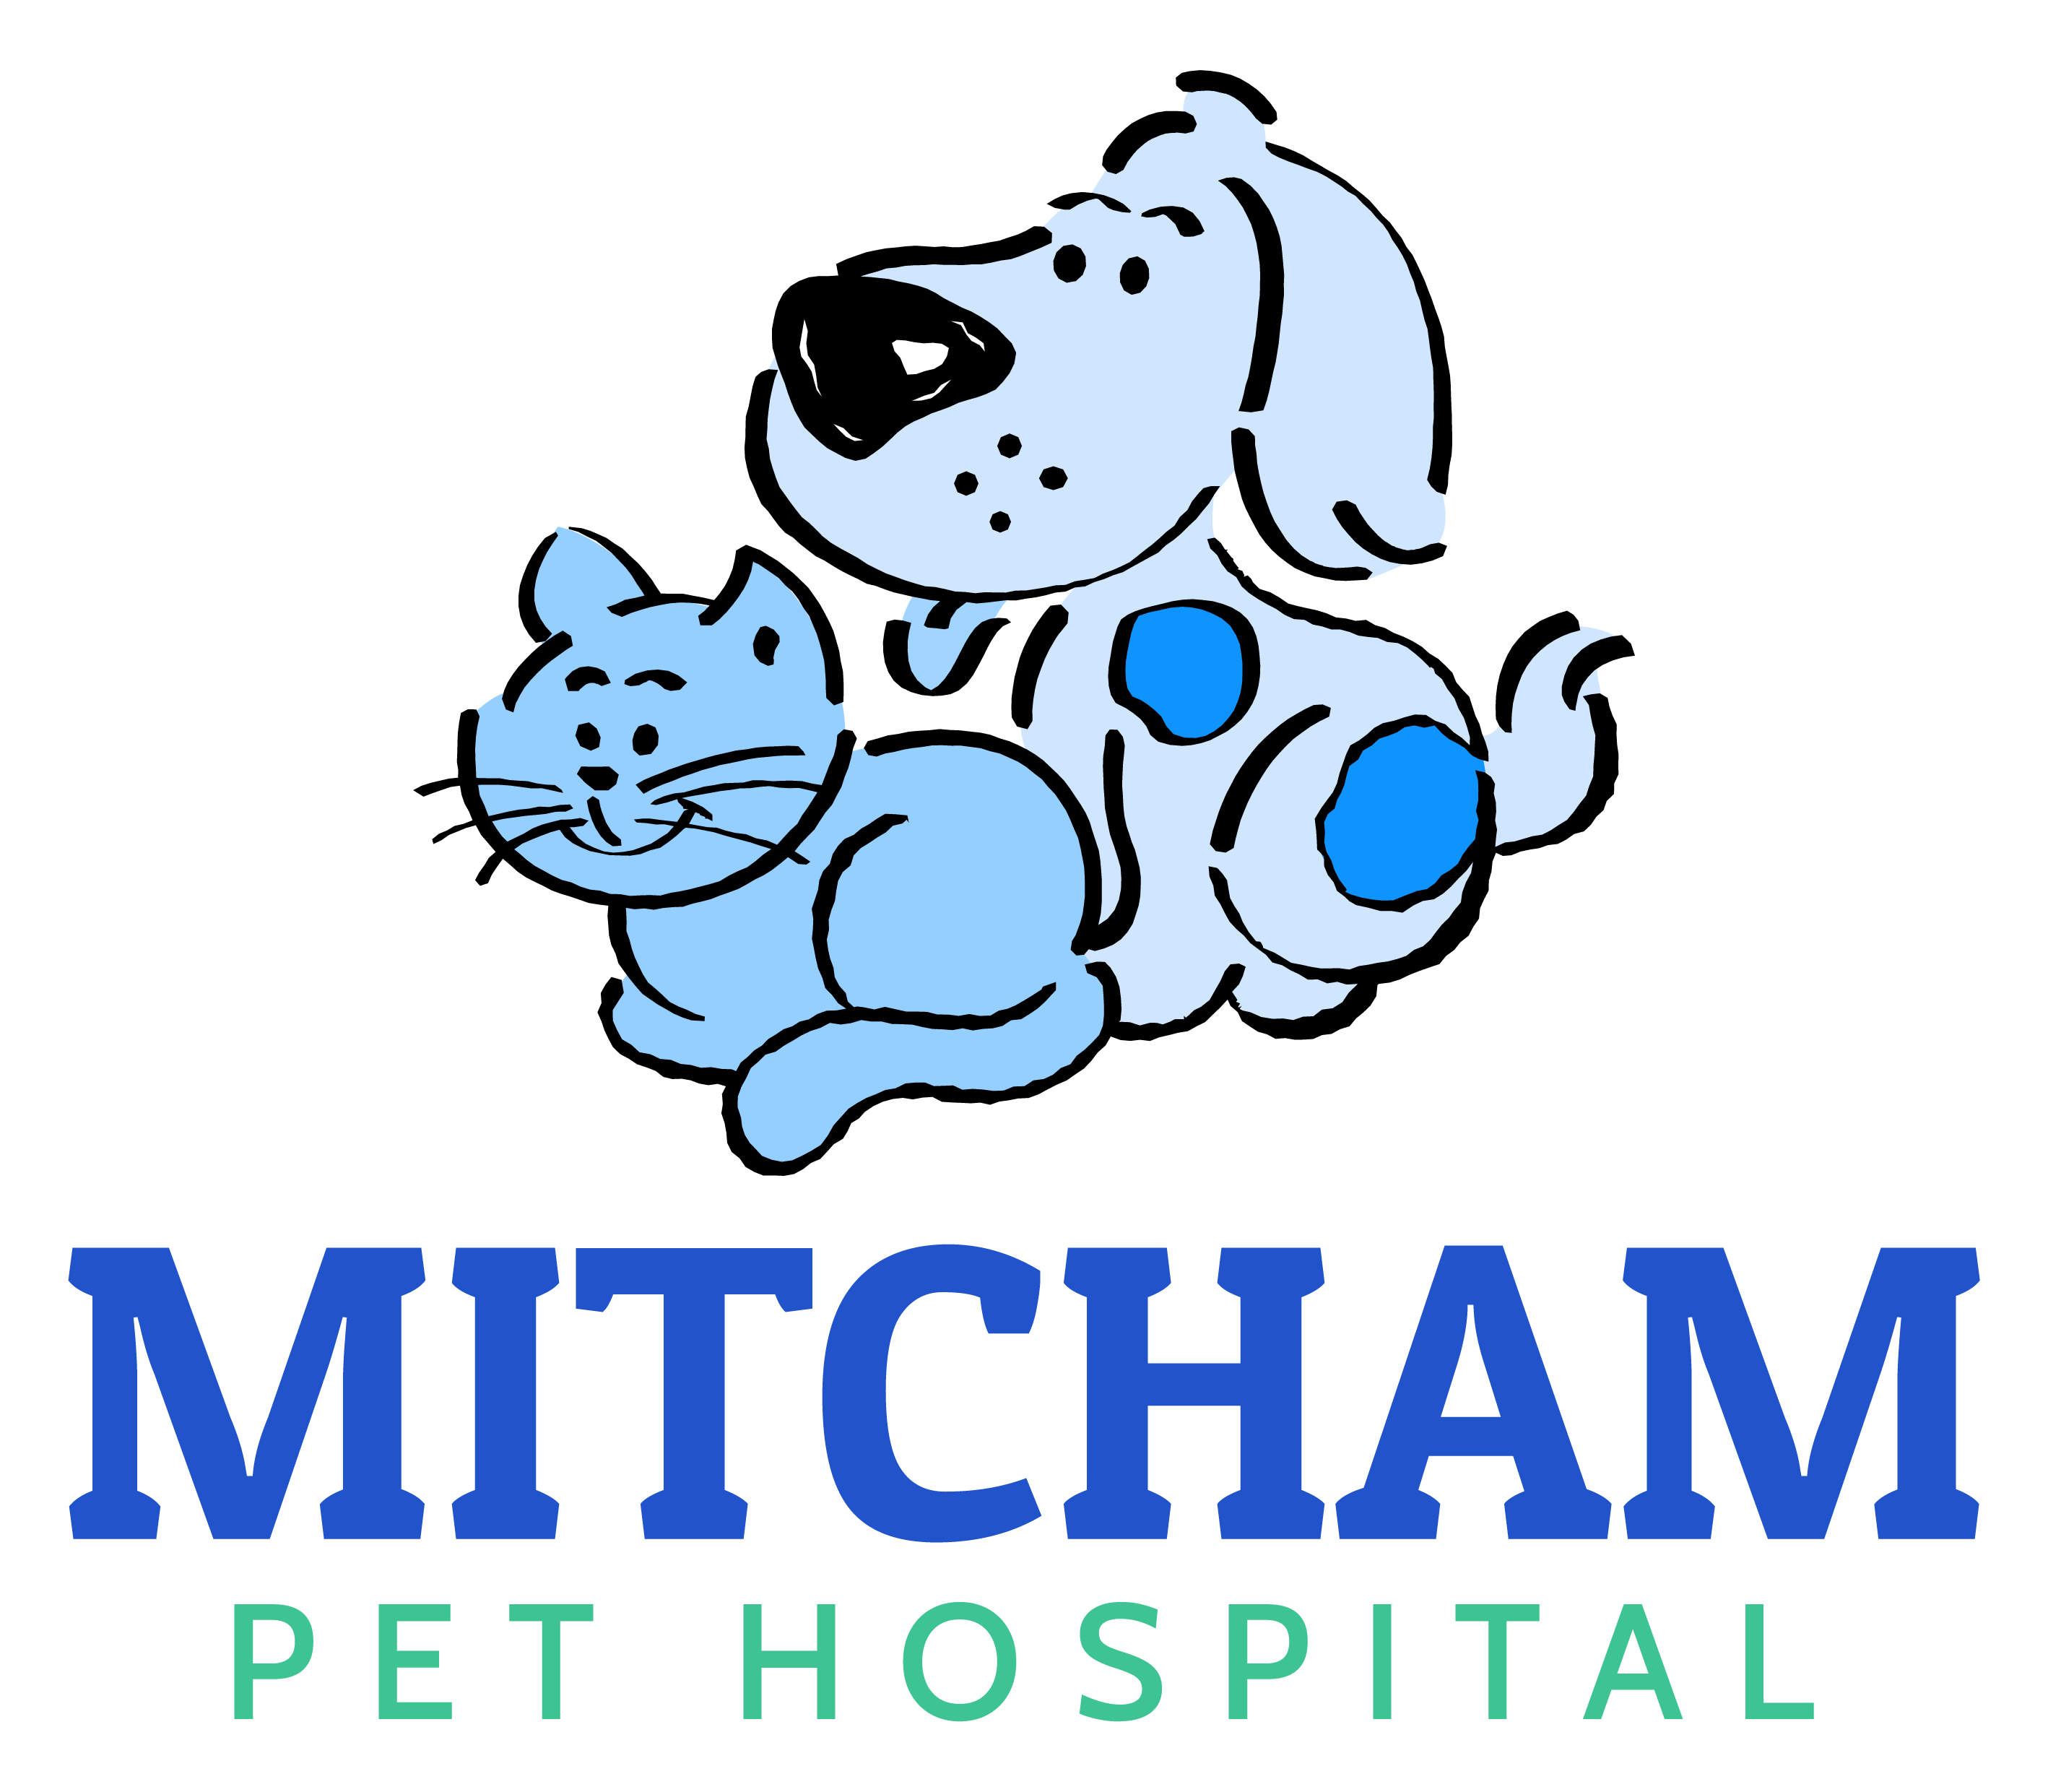 Mitcham Pet Hospital Logo